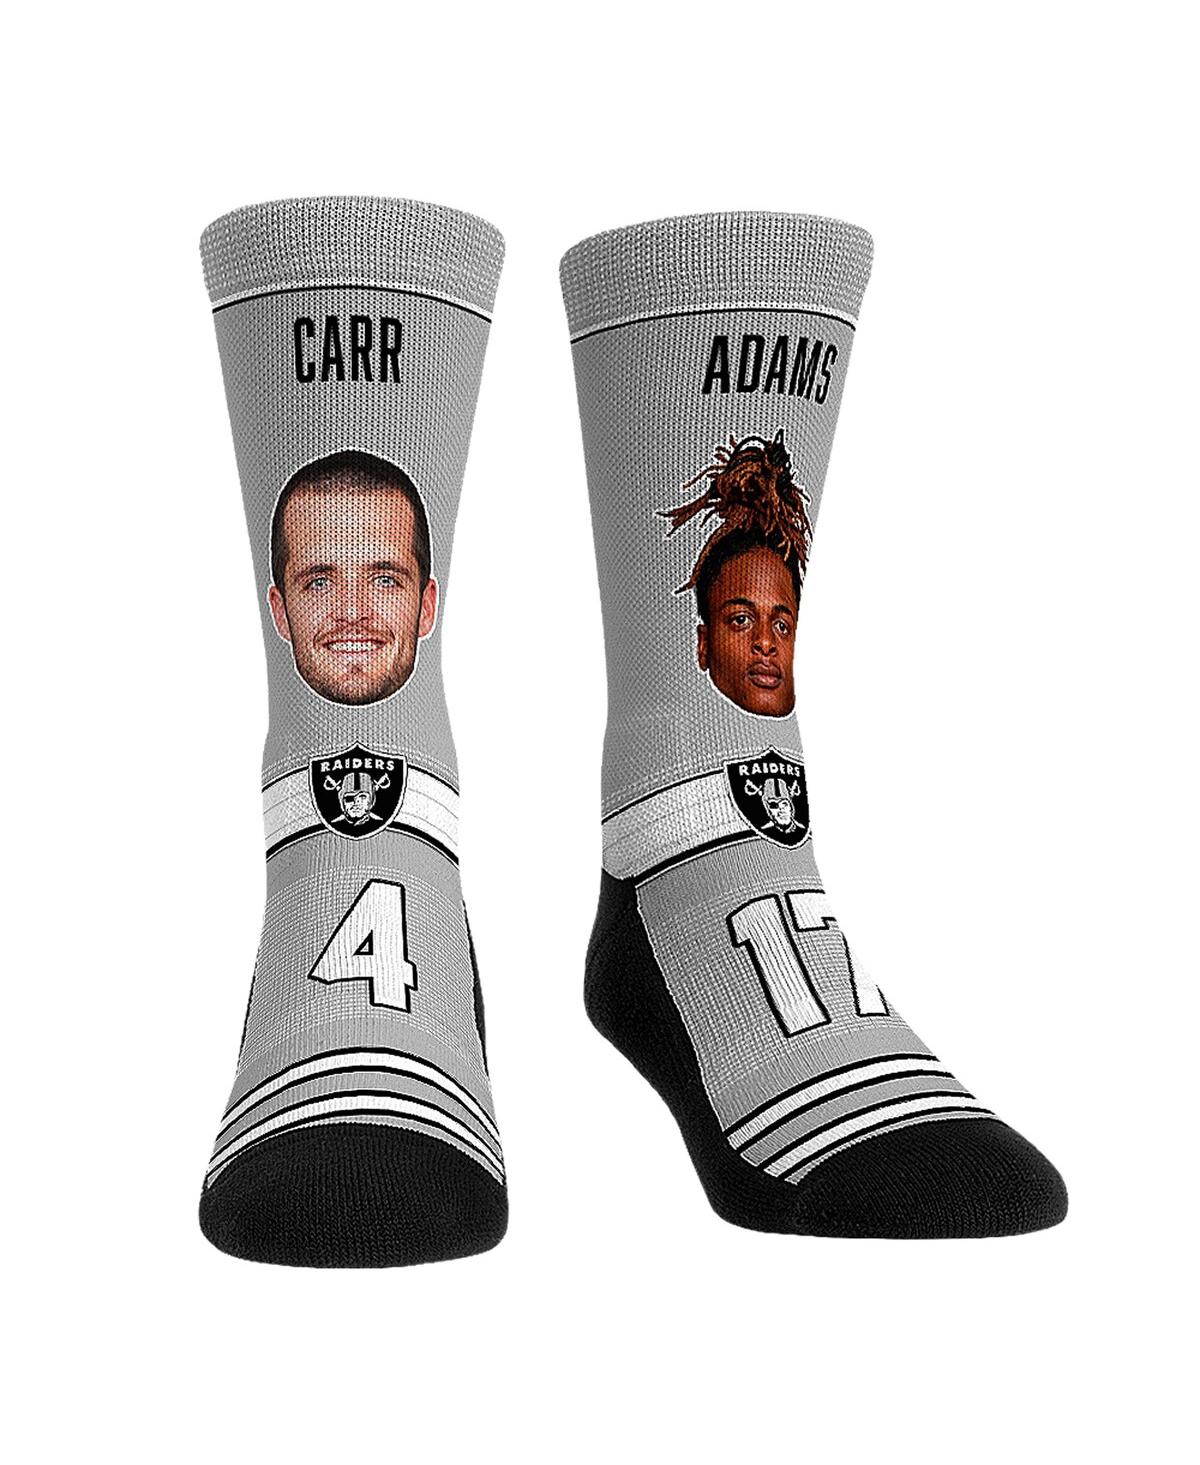 Men's and Women's Rock 'Em Socks Derek Carr & Davante Adams Las Vegas Raiders Player Teammates Crew Socks - Multi